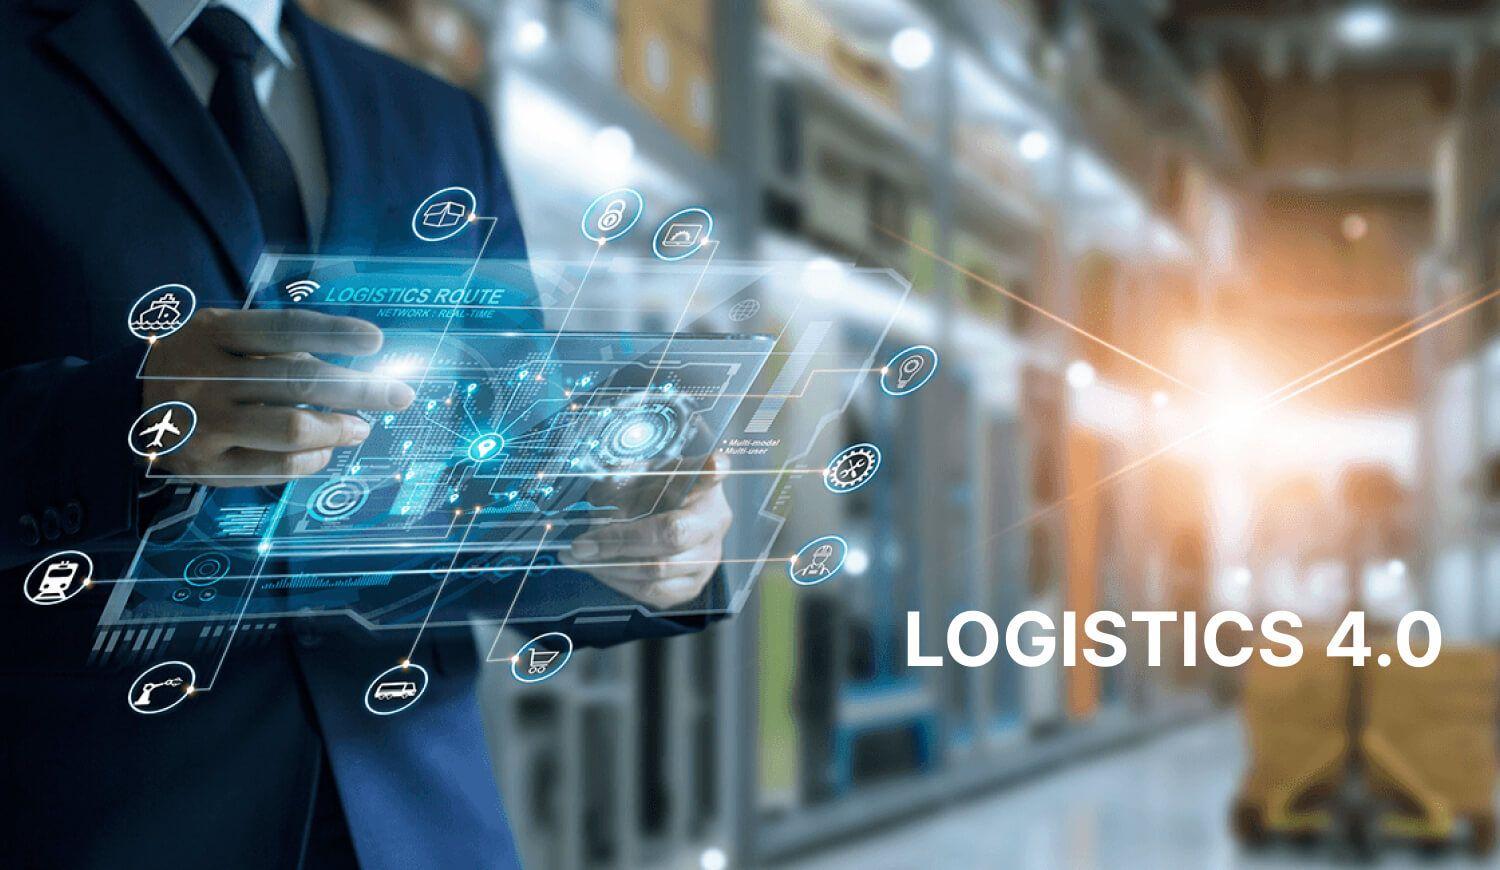 Logistics 4.0: The digital revolution in logistics